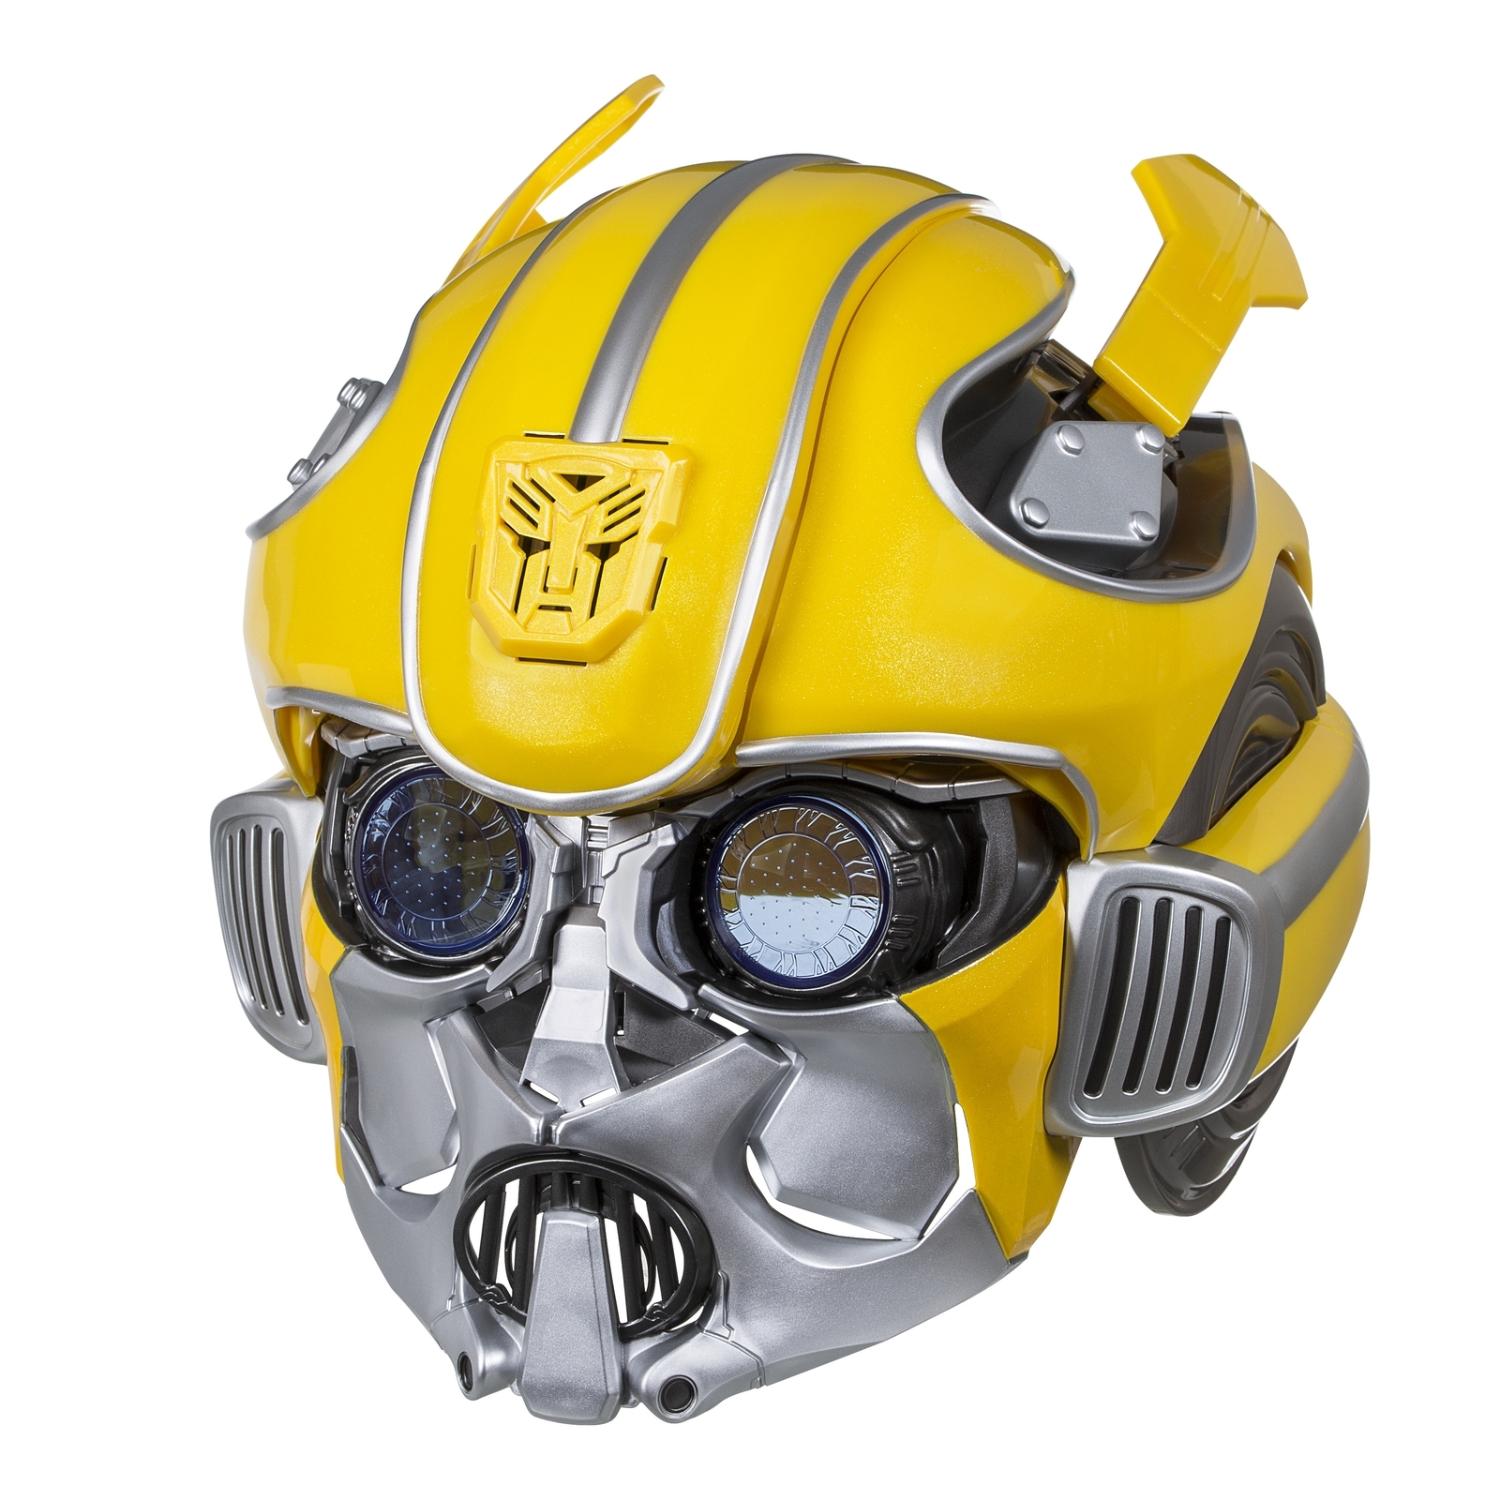 Игрушка Hasbro Transformers маска БАМБЛБИ электронная E0704 - фото 1